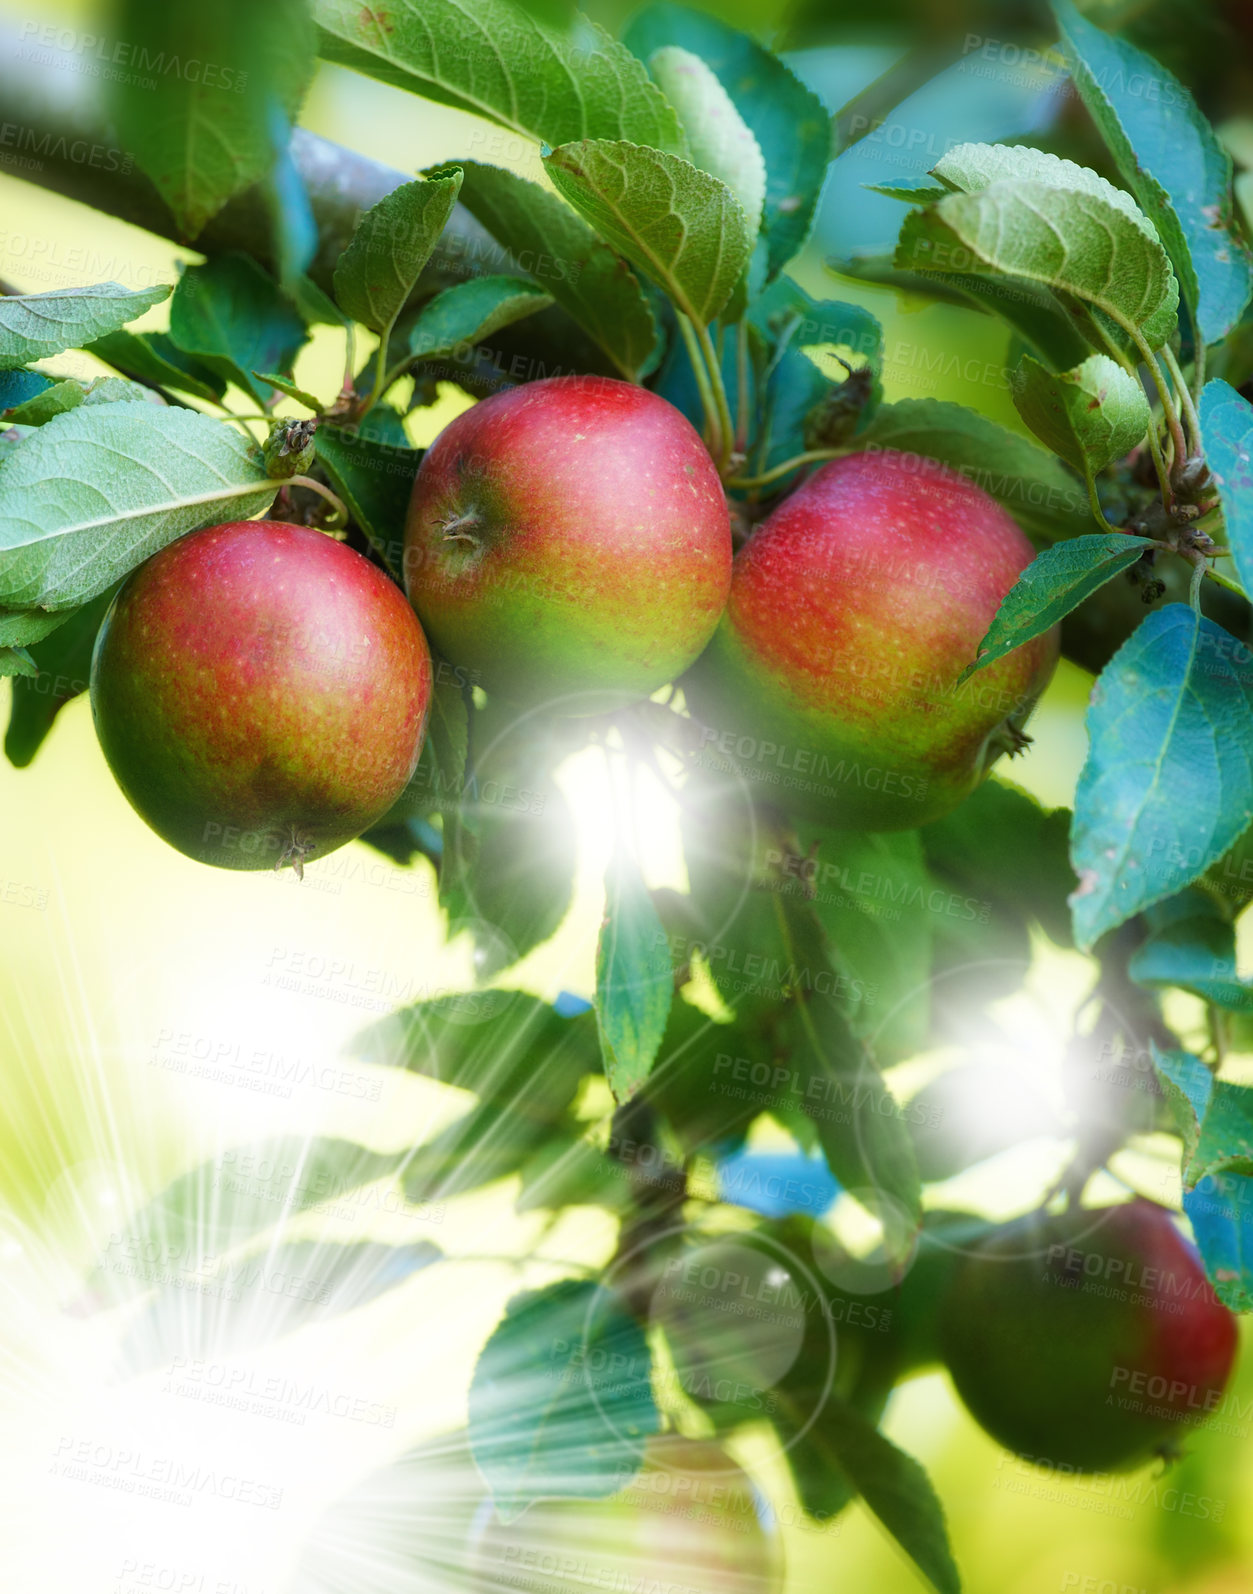 Buy stock photo Fresh apple in the tree